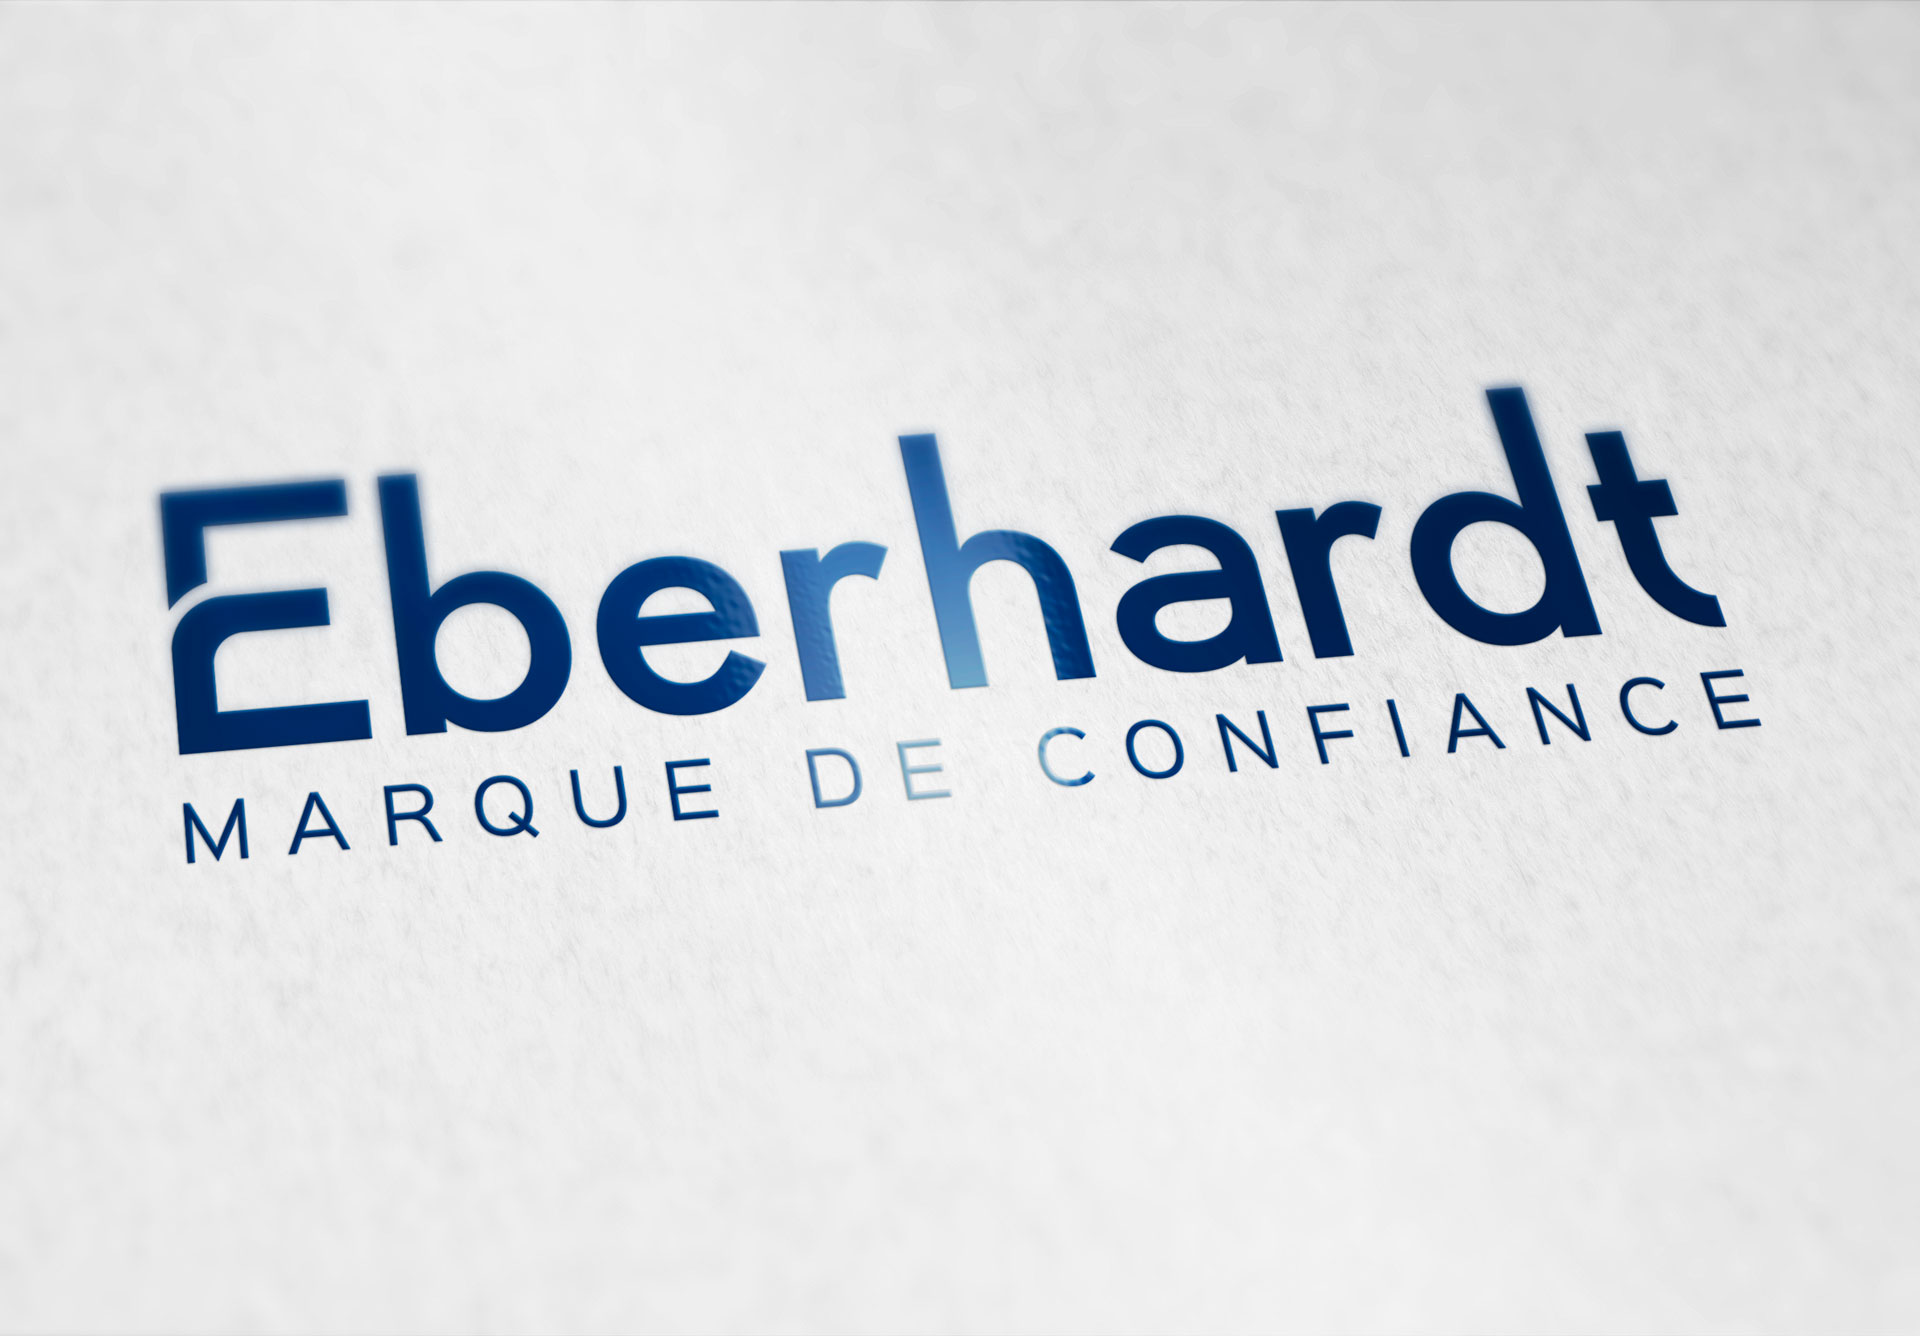 Eberhardt logo